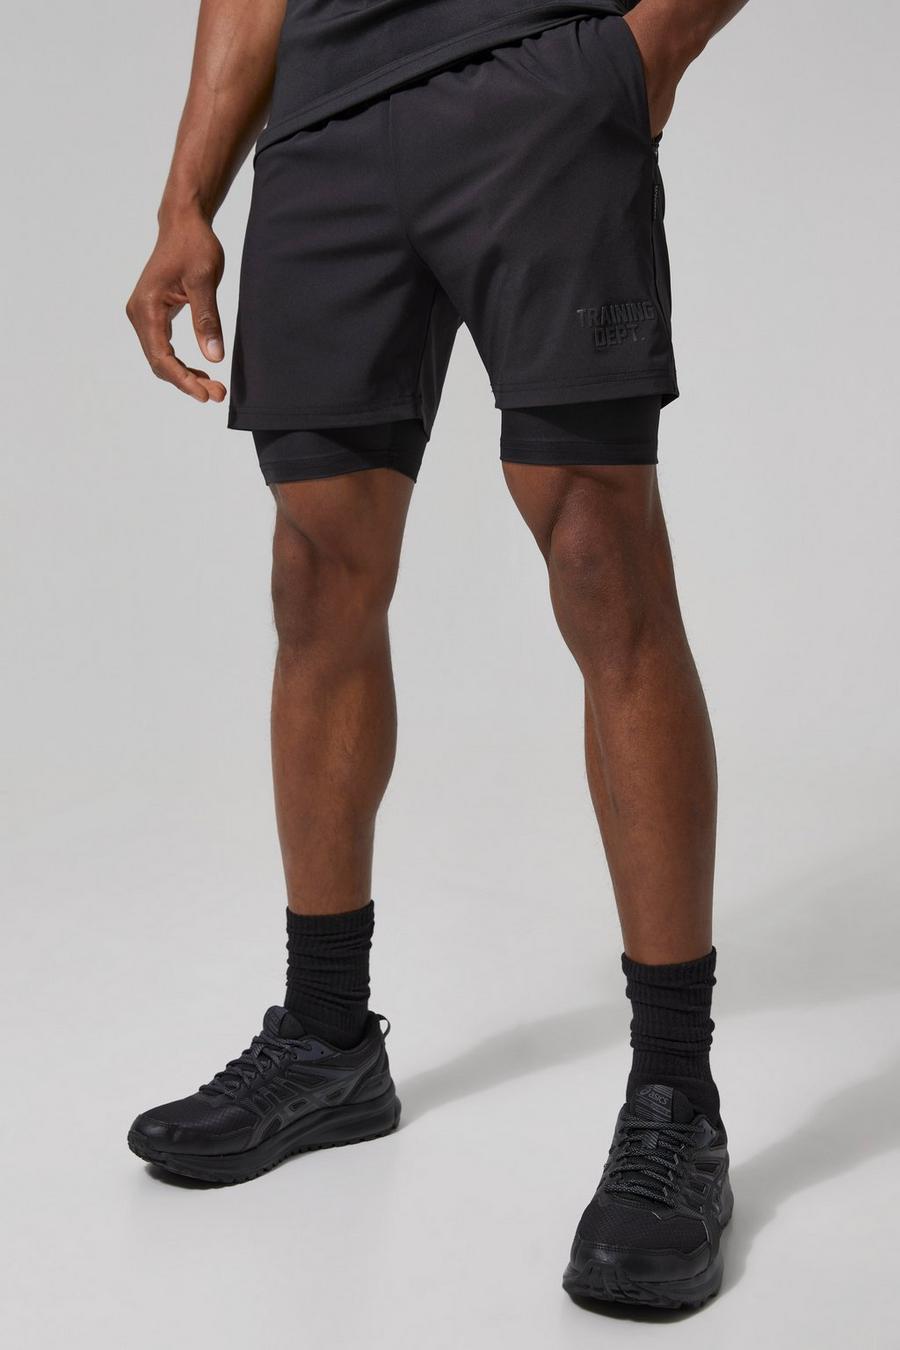 Man Active Training Dept 2-in-1 Shorts, Black